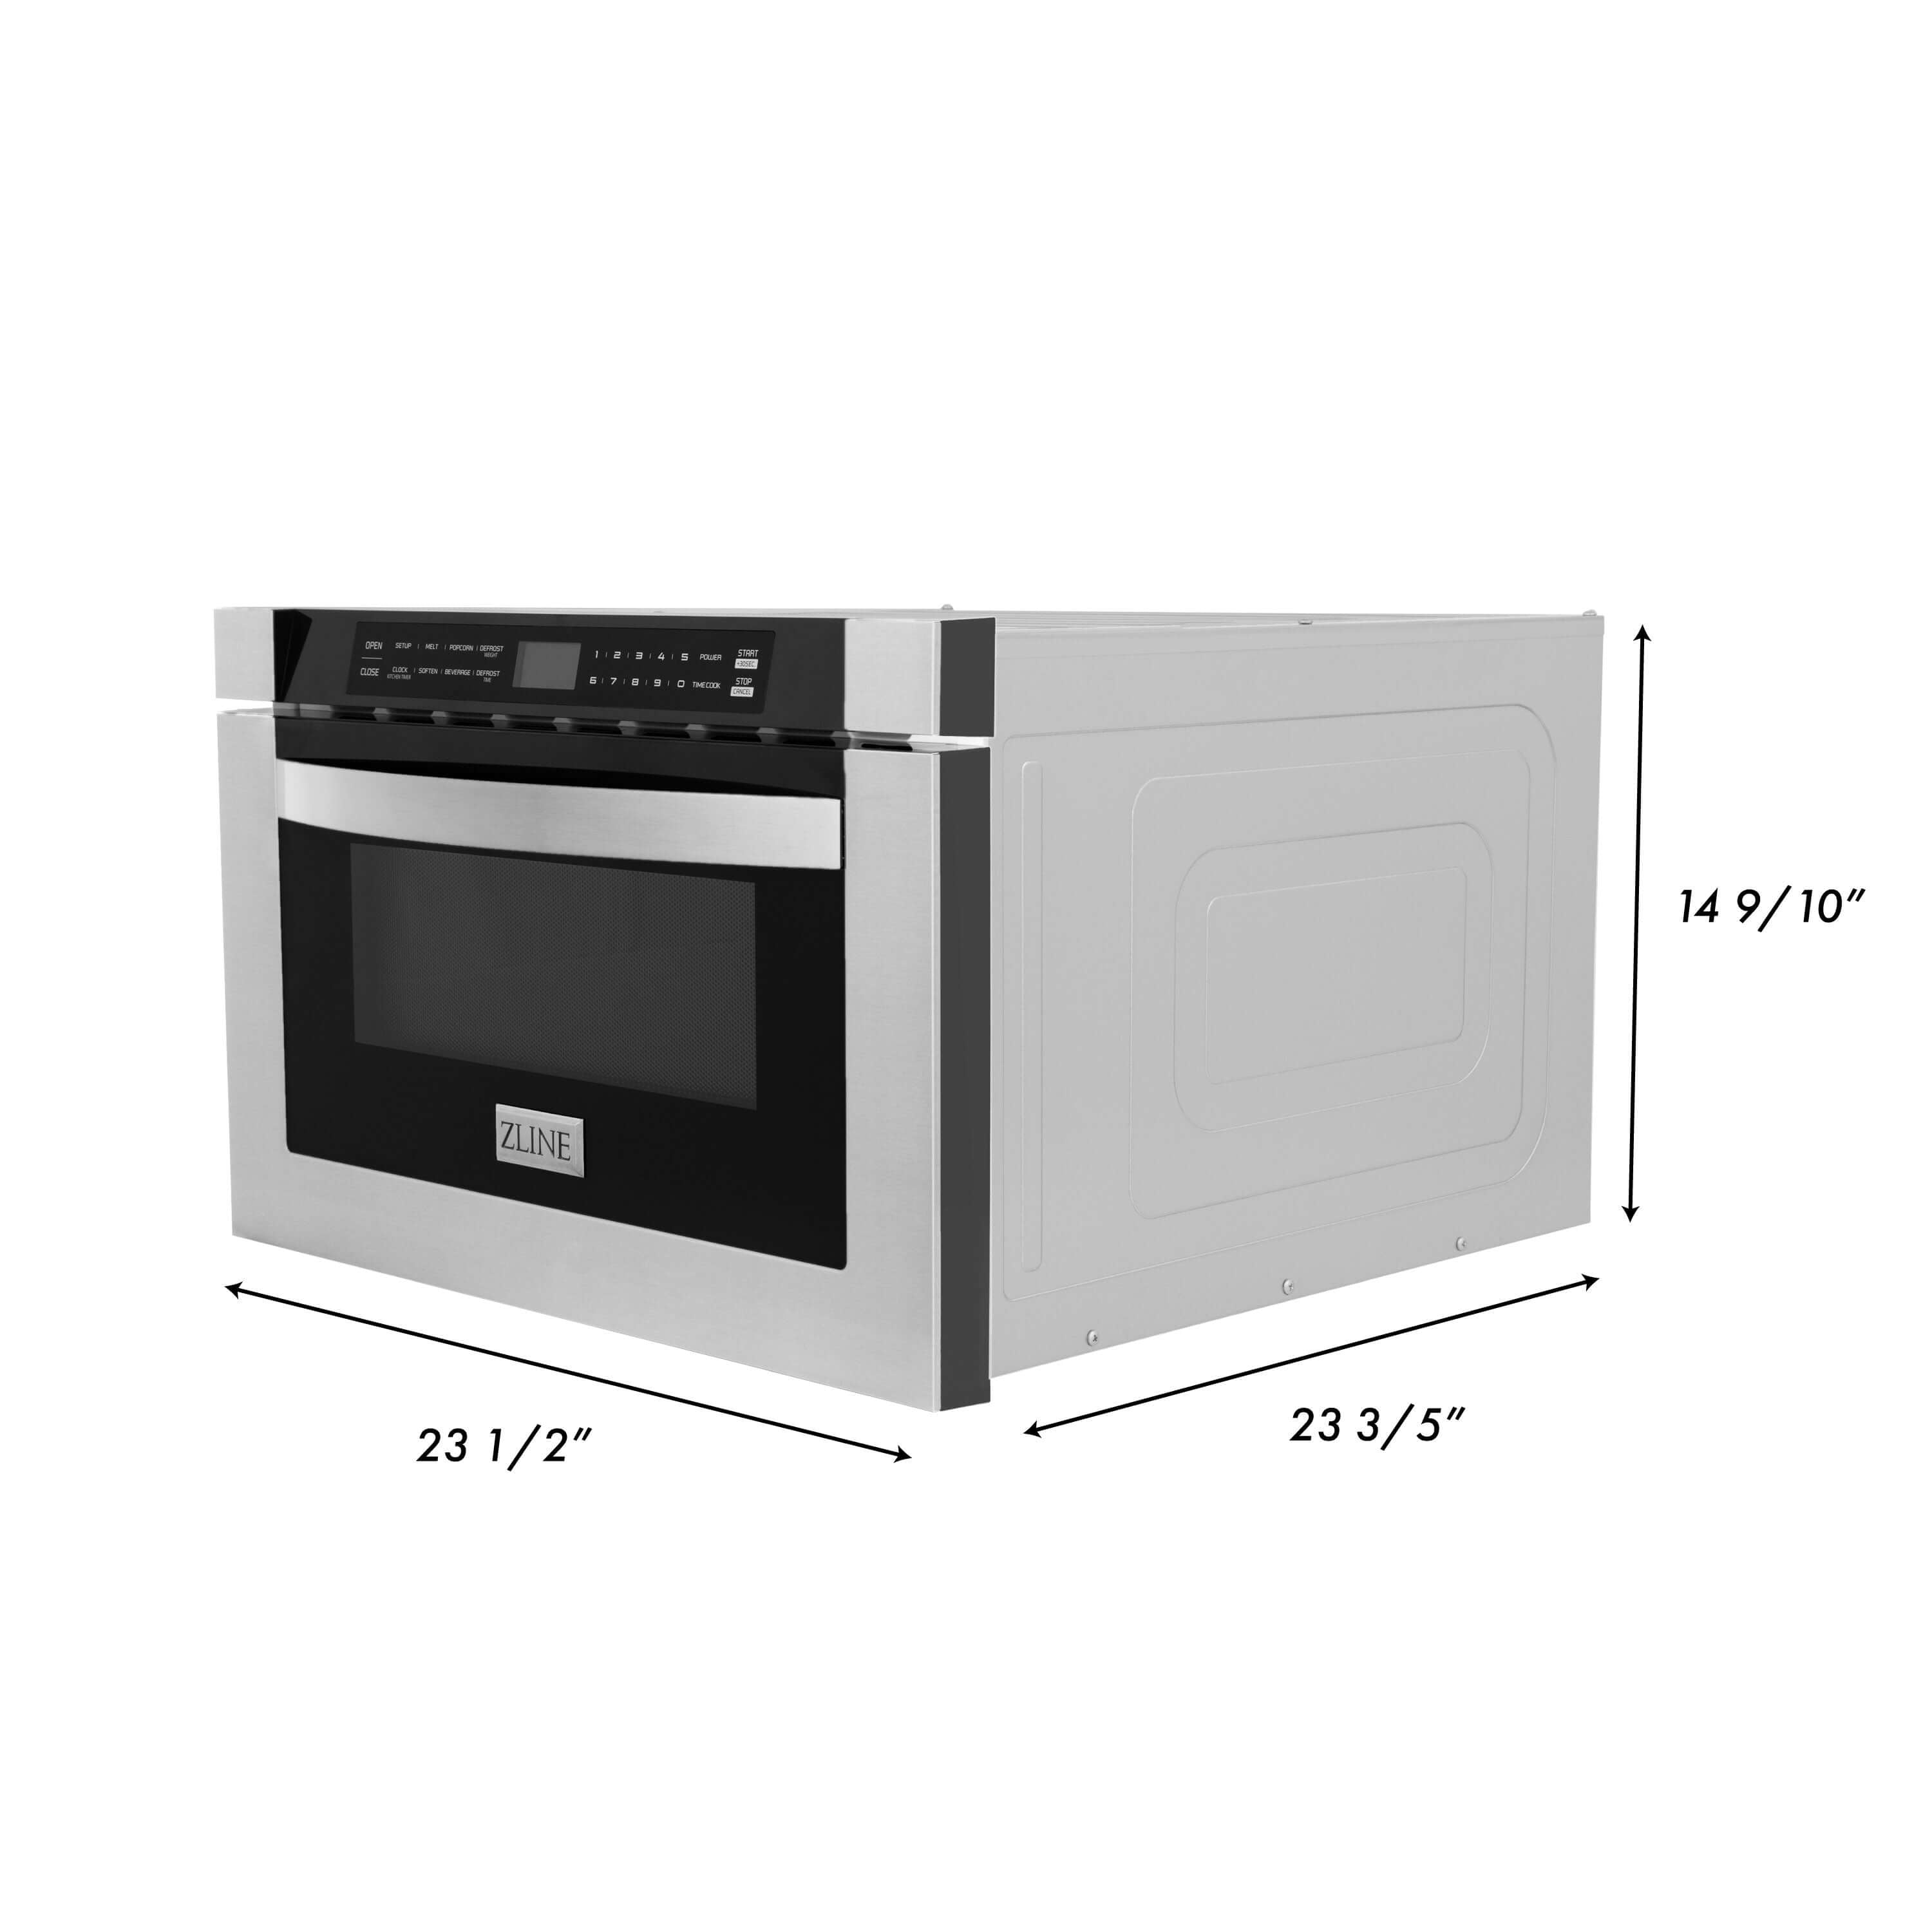 ZLINE 24" Microwave Drawer dimensions.